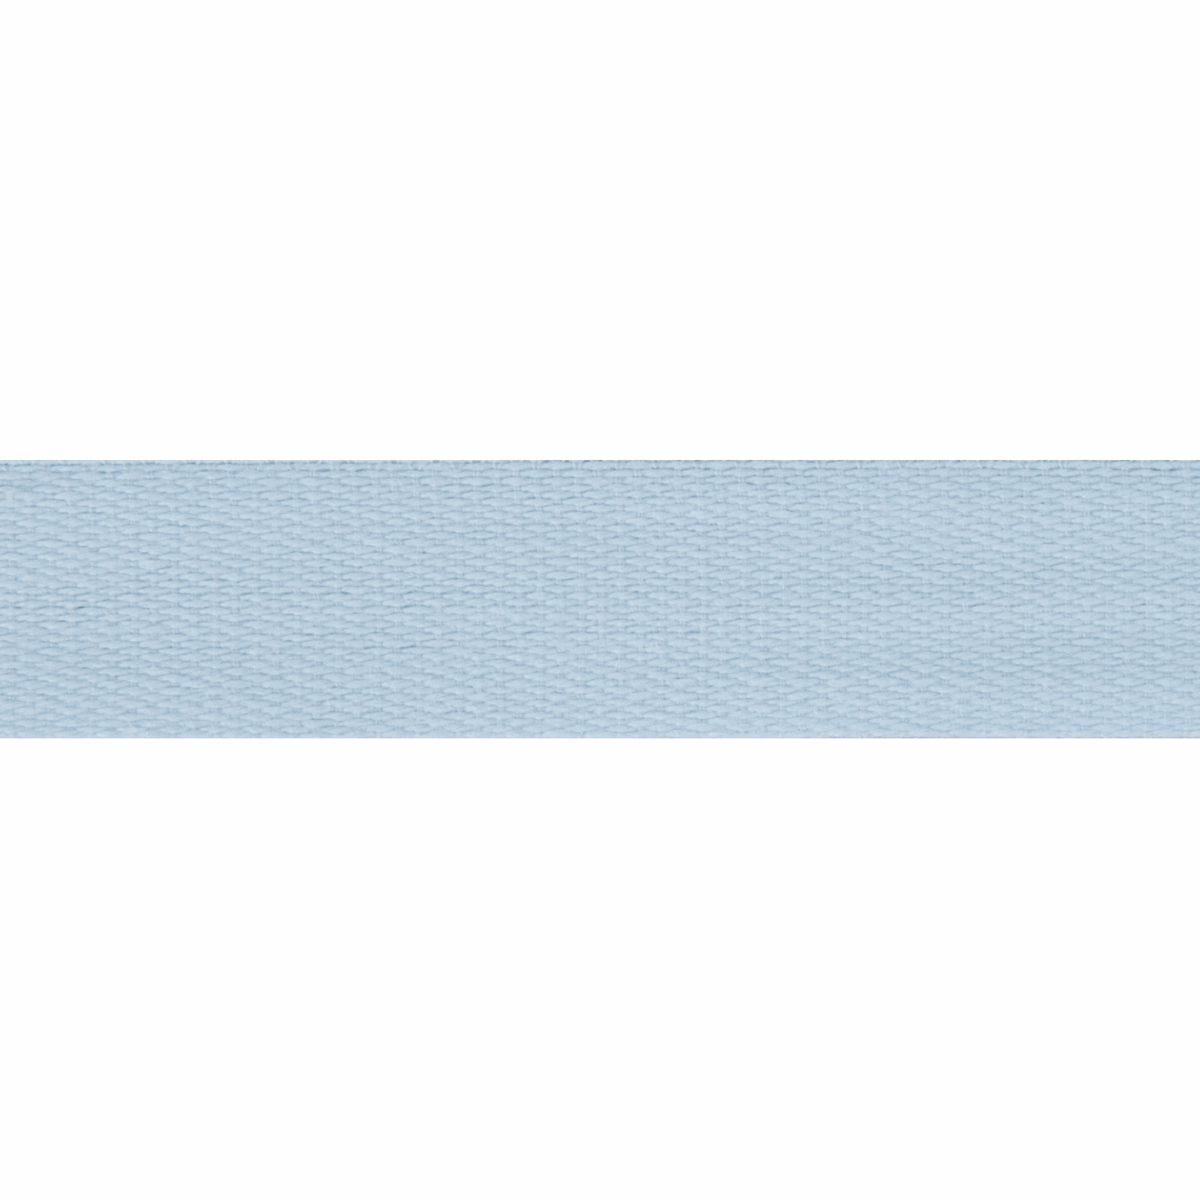 Cotton Tape Premium Quality: Light Blue: 14mm wide. Price per metre.